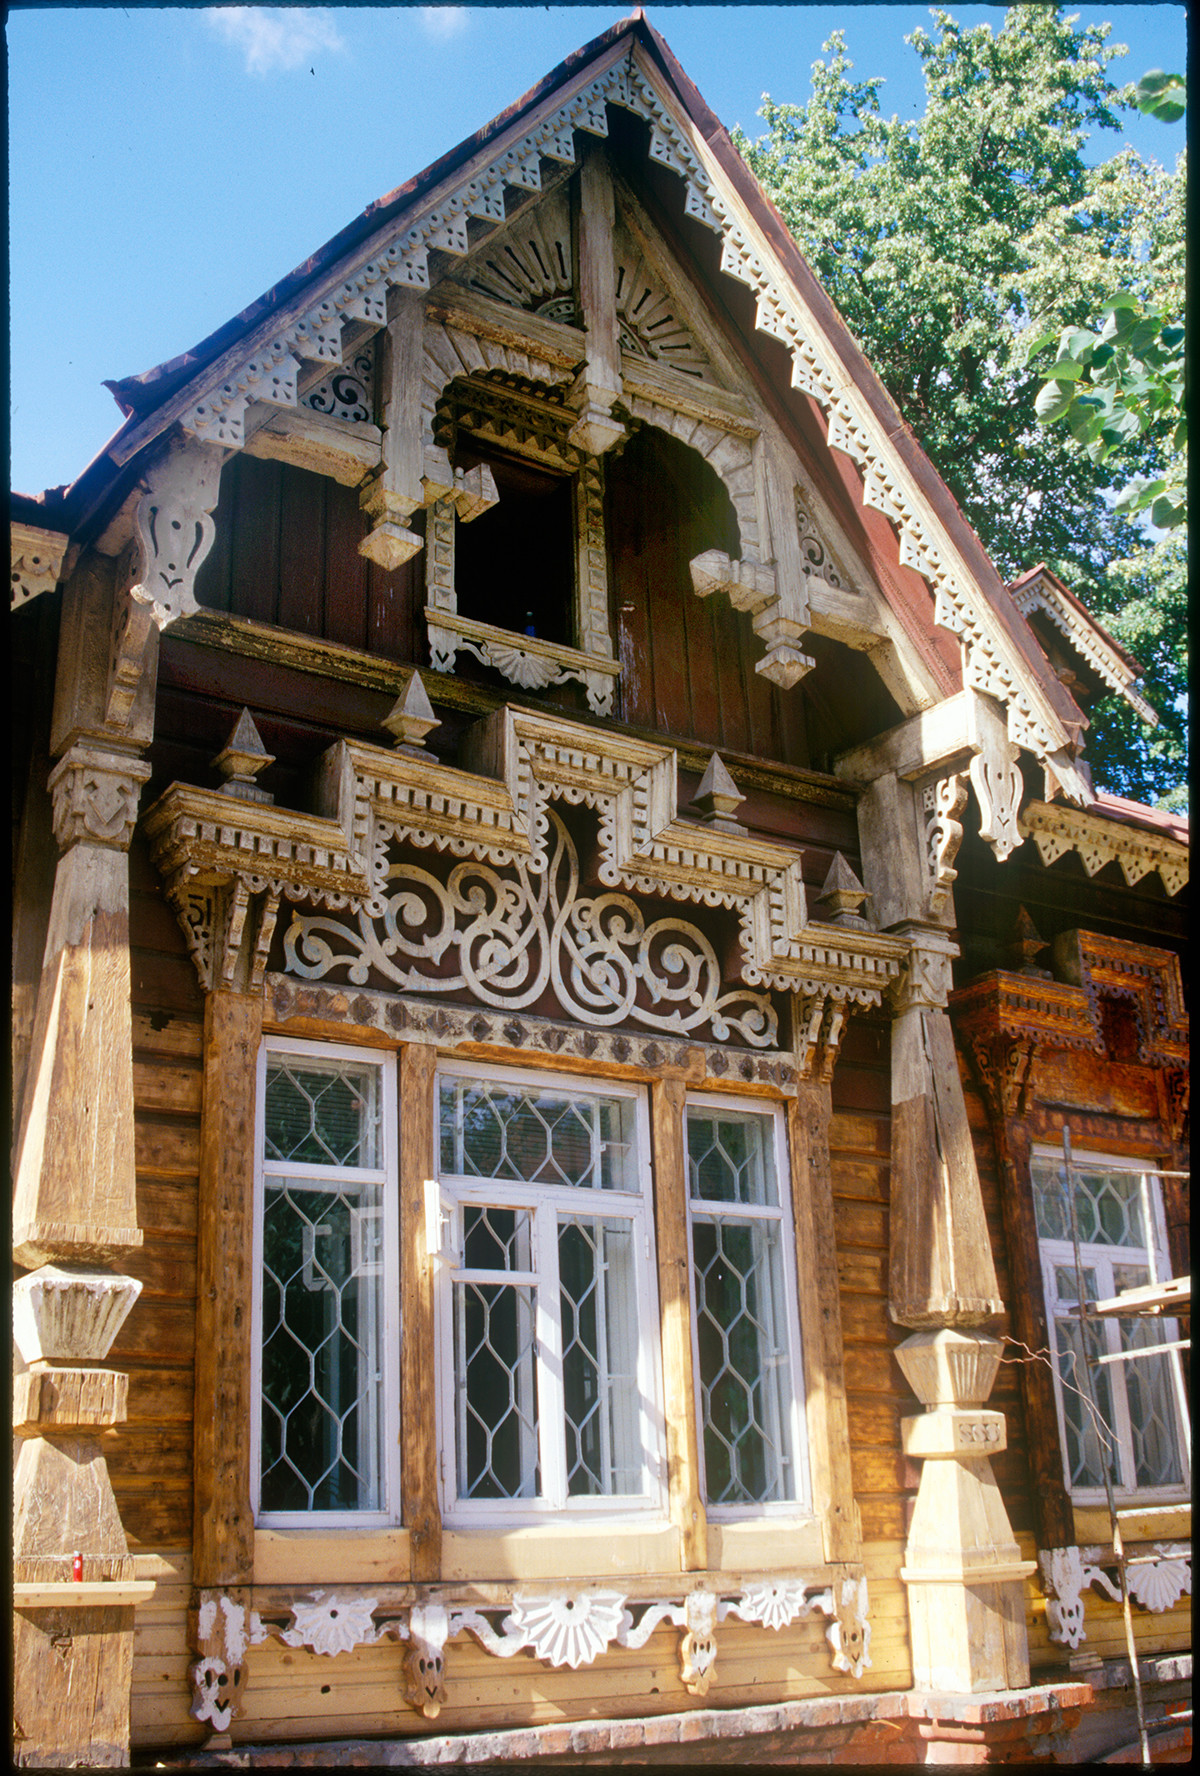 Tokarev House. Main facade, window detail. August 23, 1999 